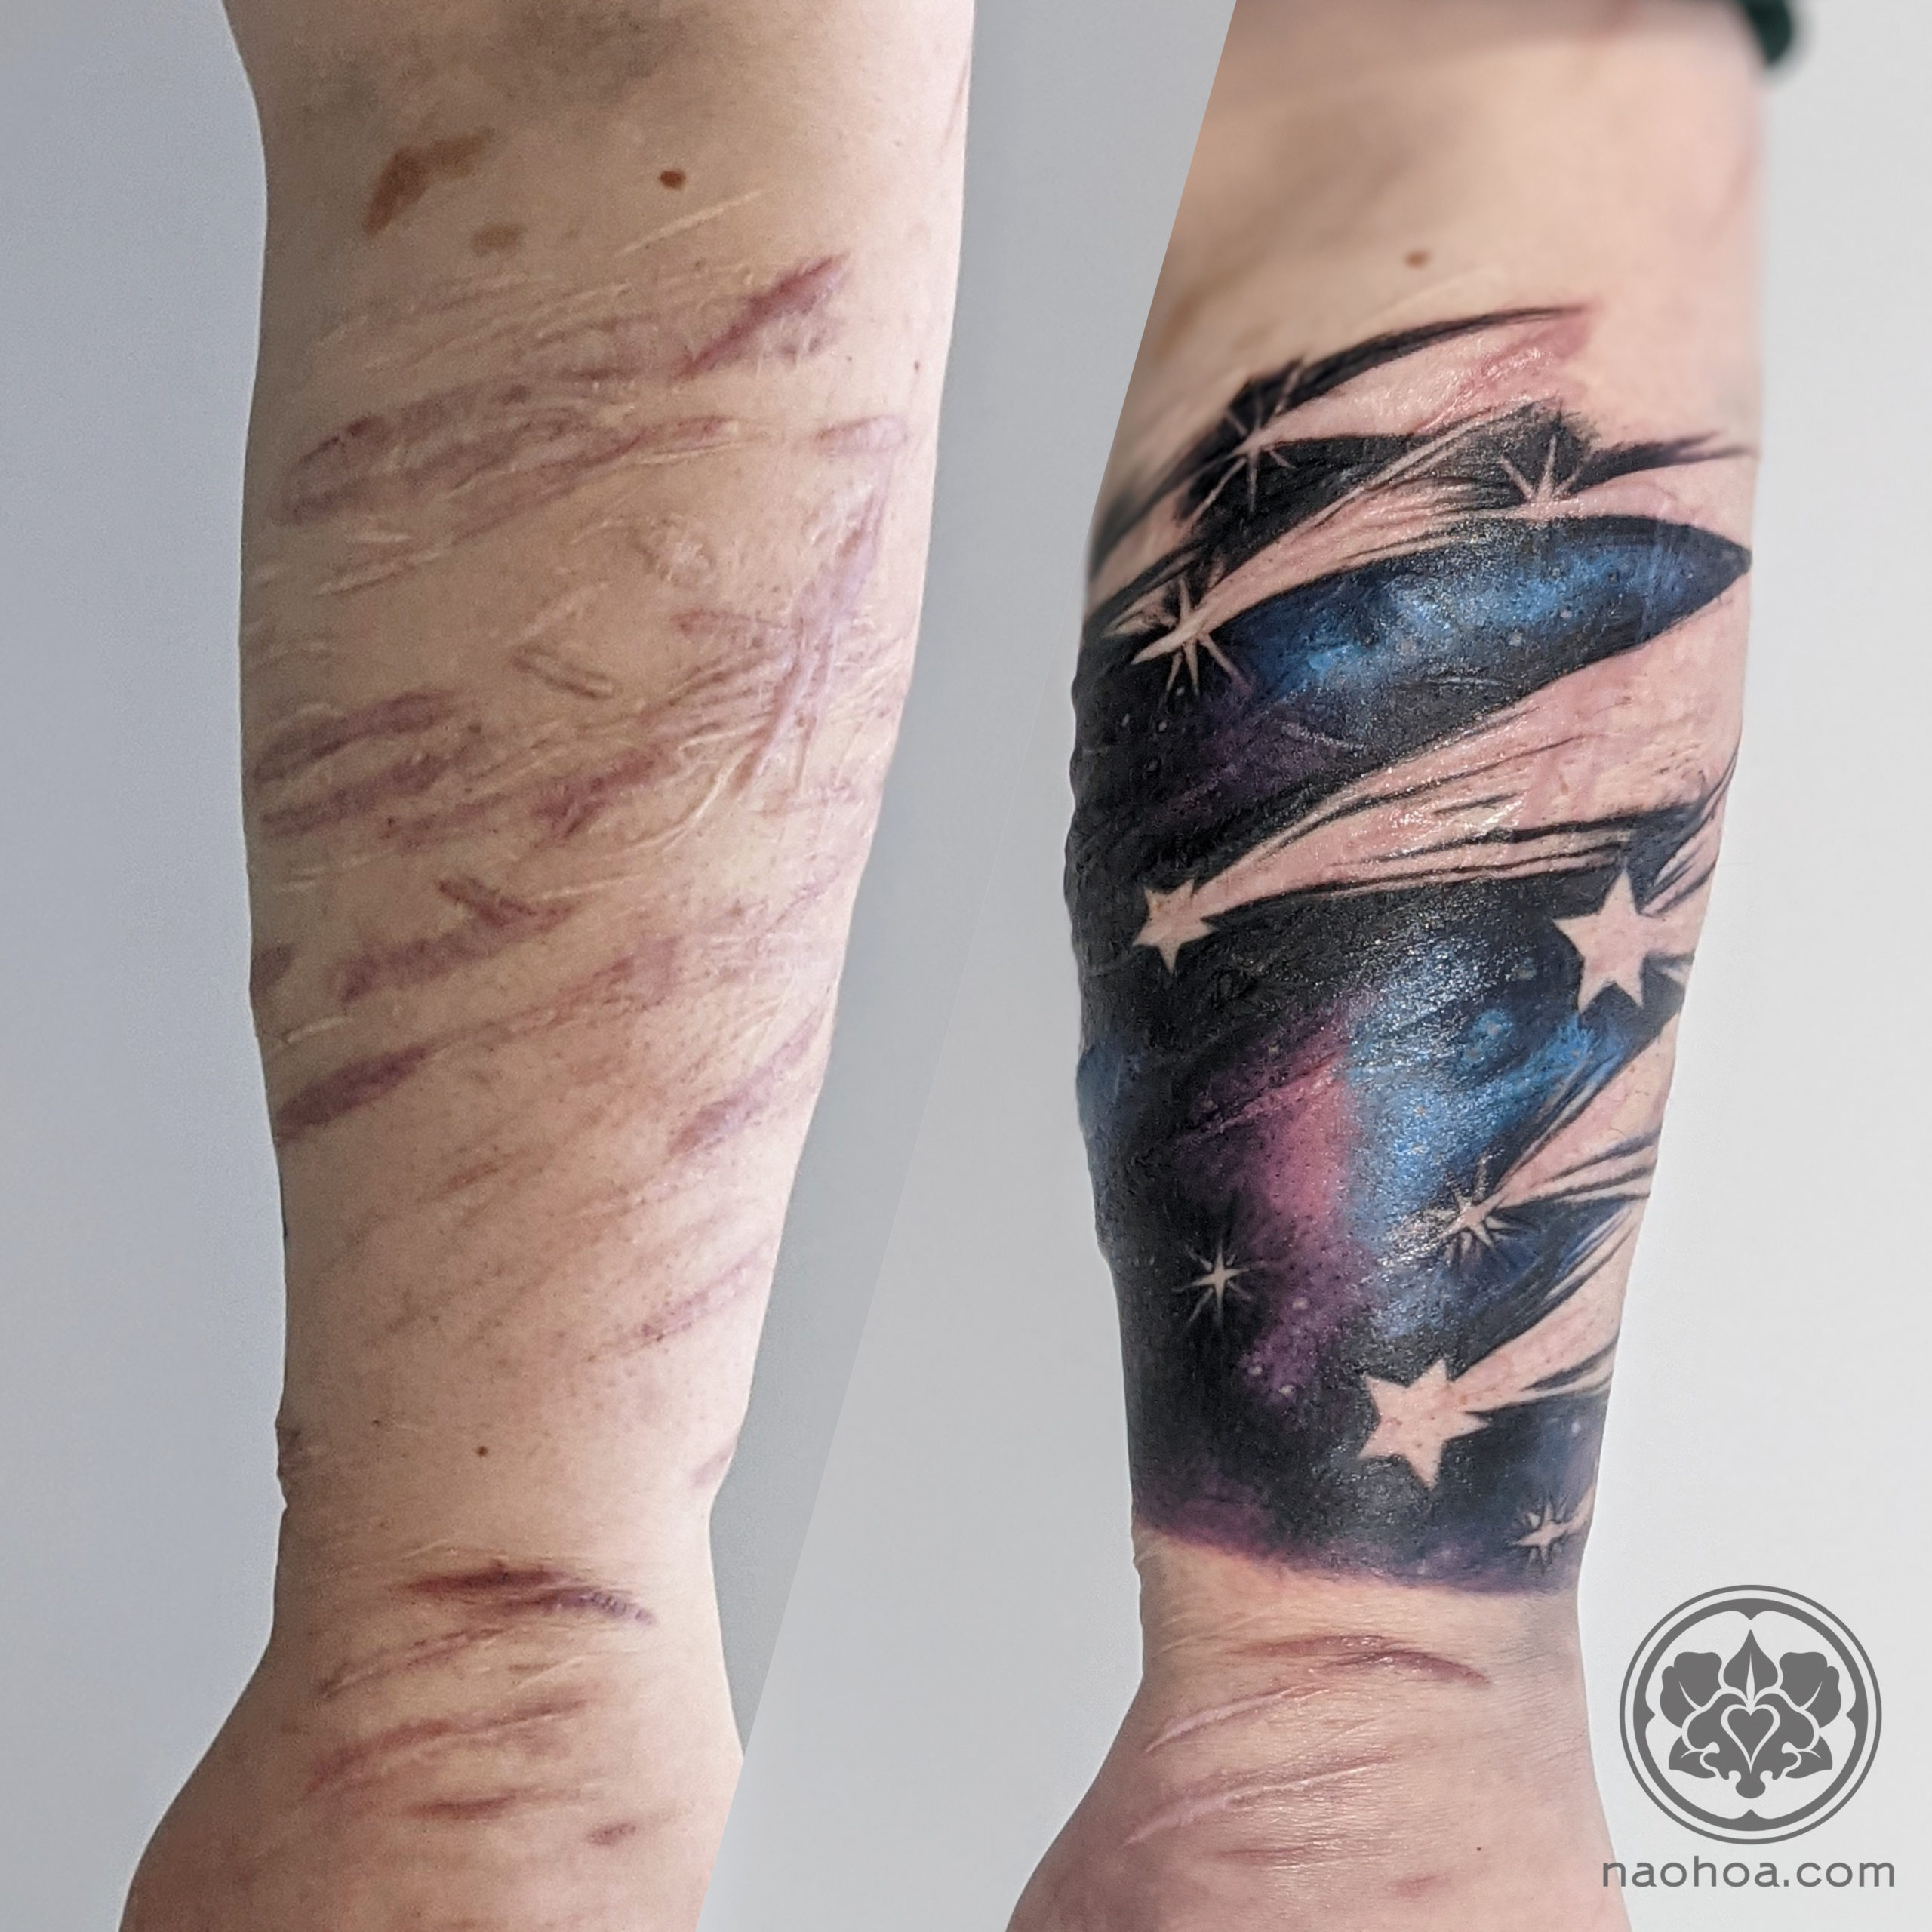 Tattoos over keloid scars